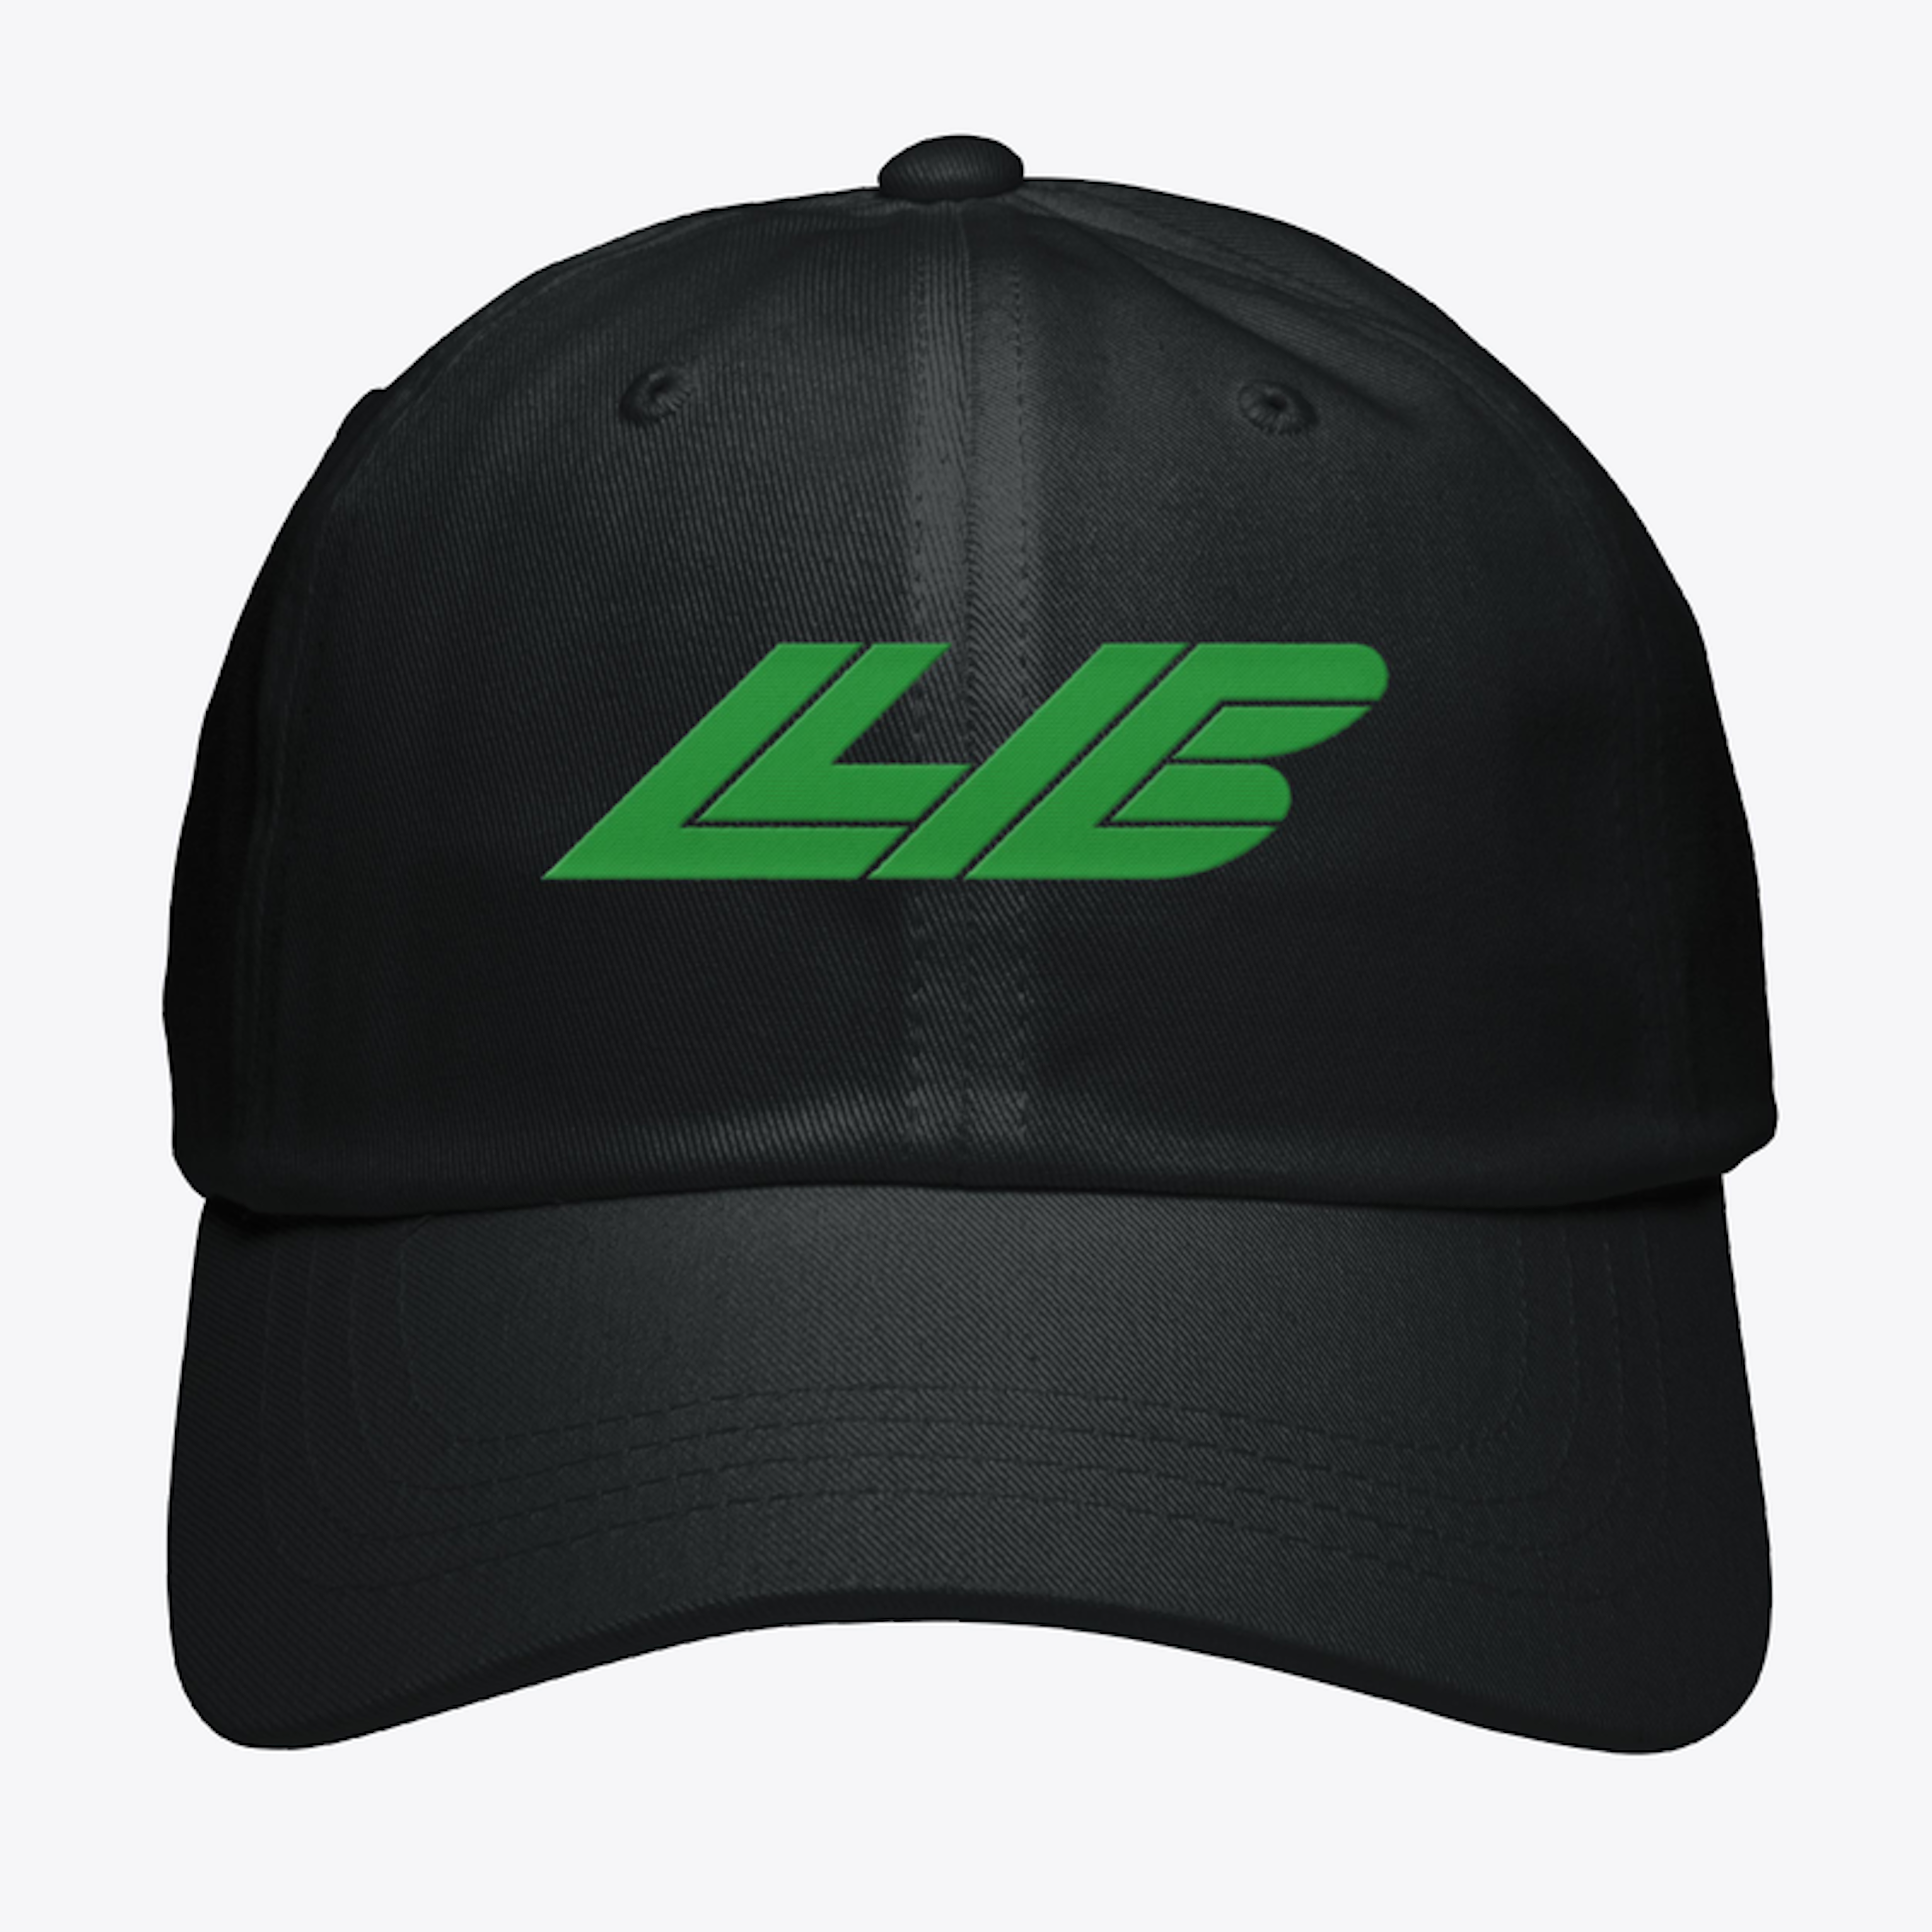 LB Cap Black with logo